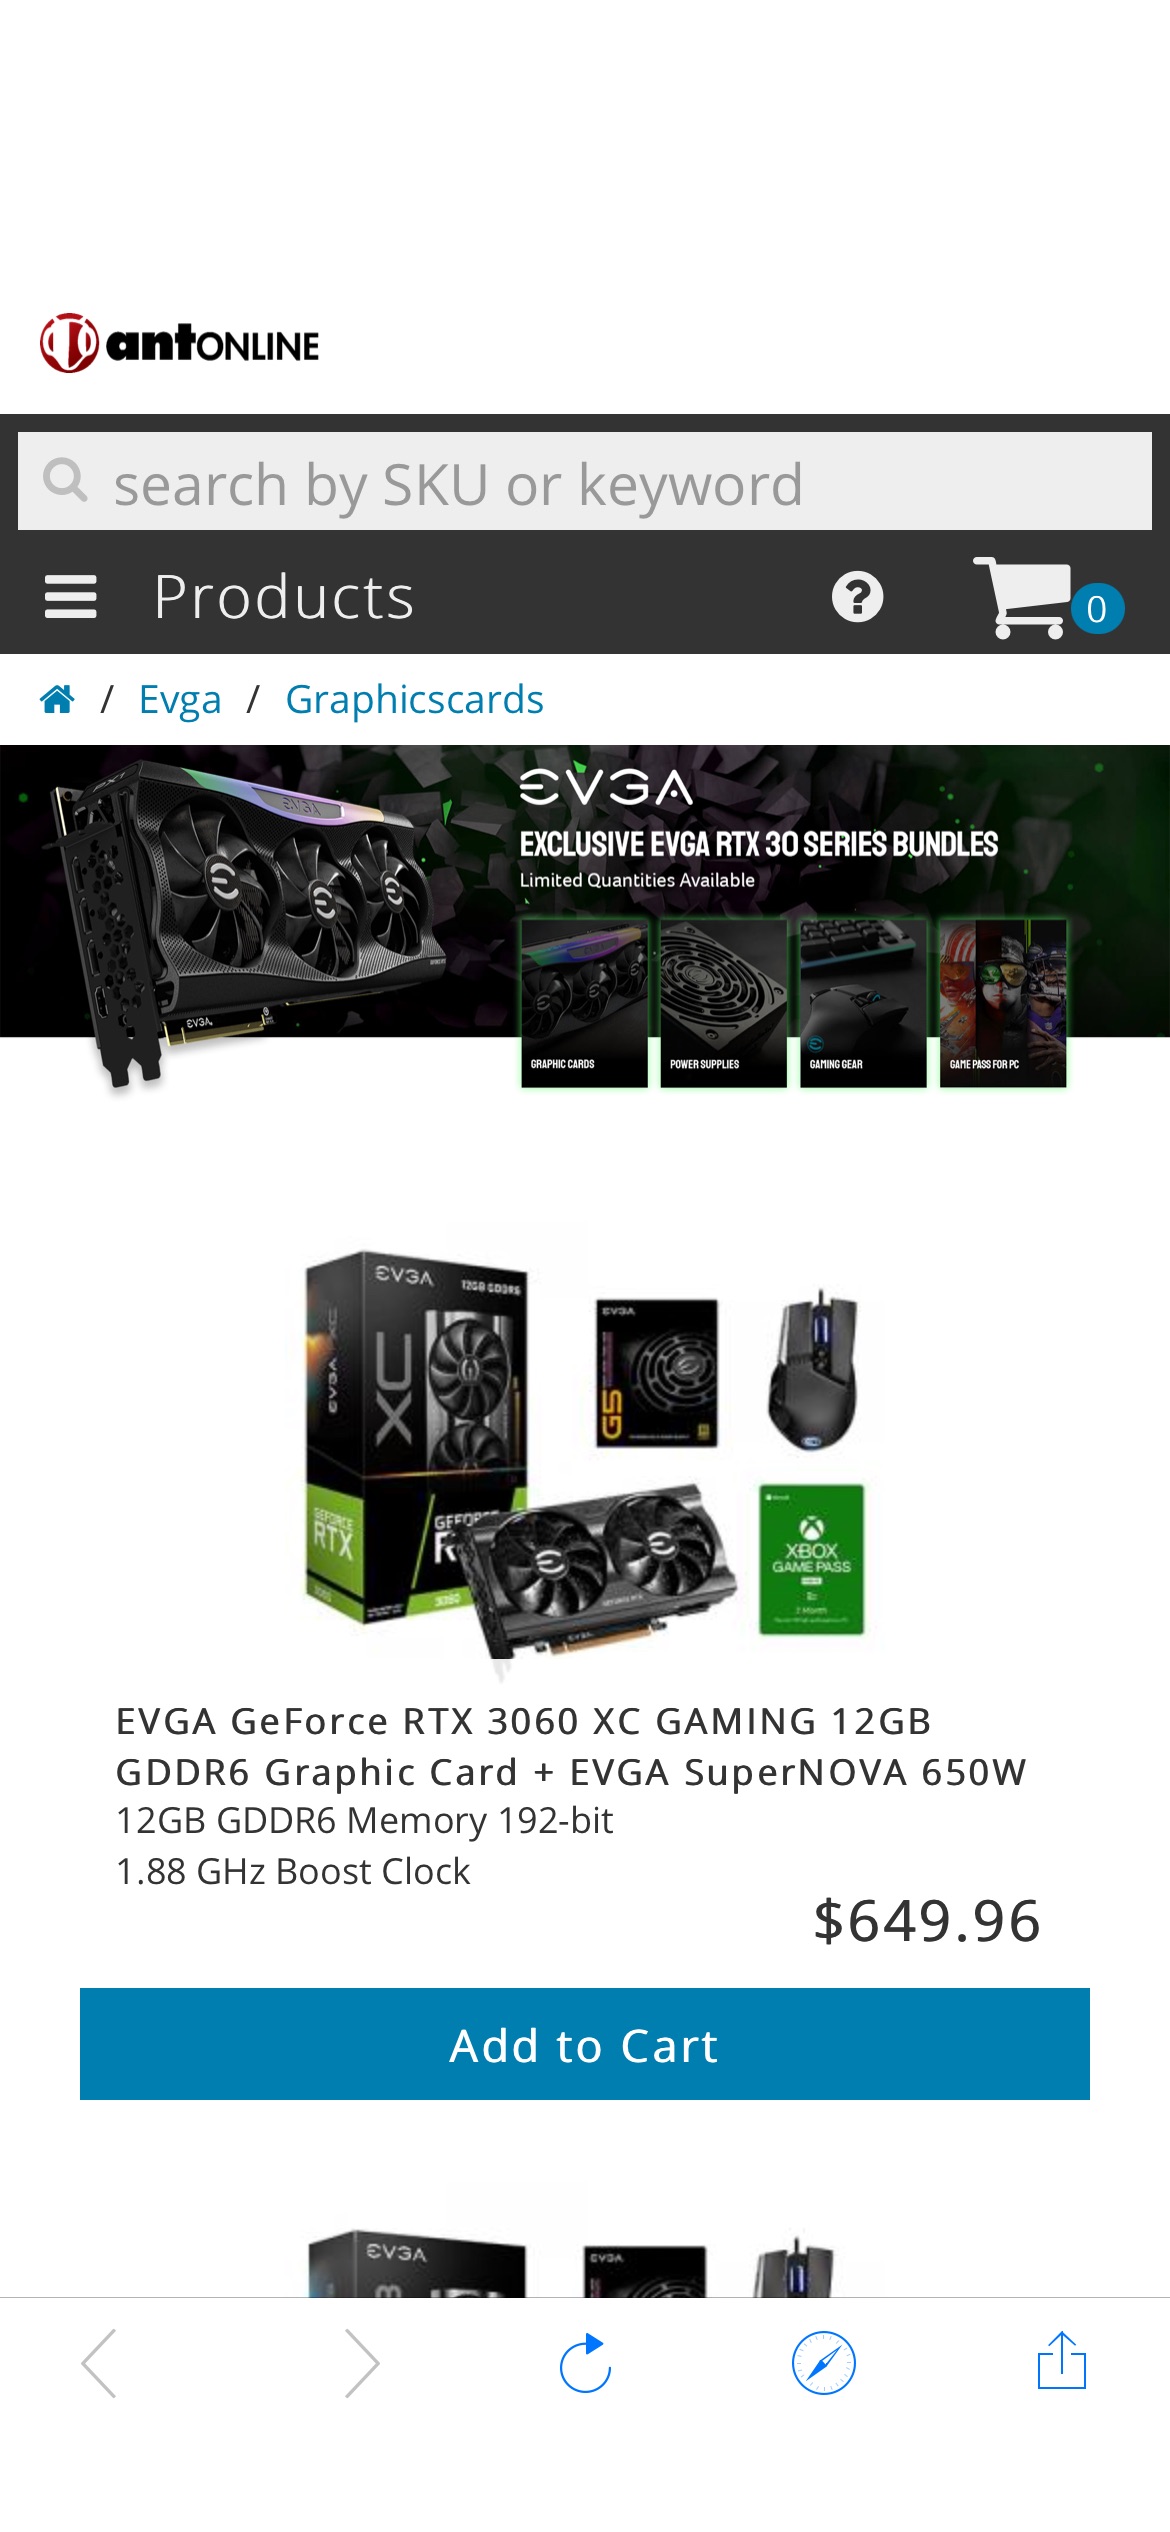 EVGA GeForce RTX 3060 XC GAMING 12GB GDDR6 Graphic Card鼠标电源xbox会员3个月套餐